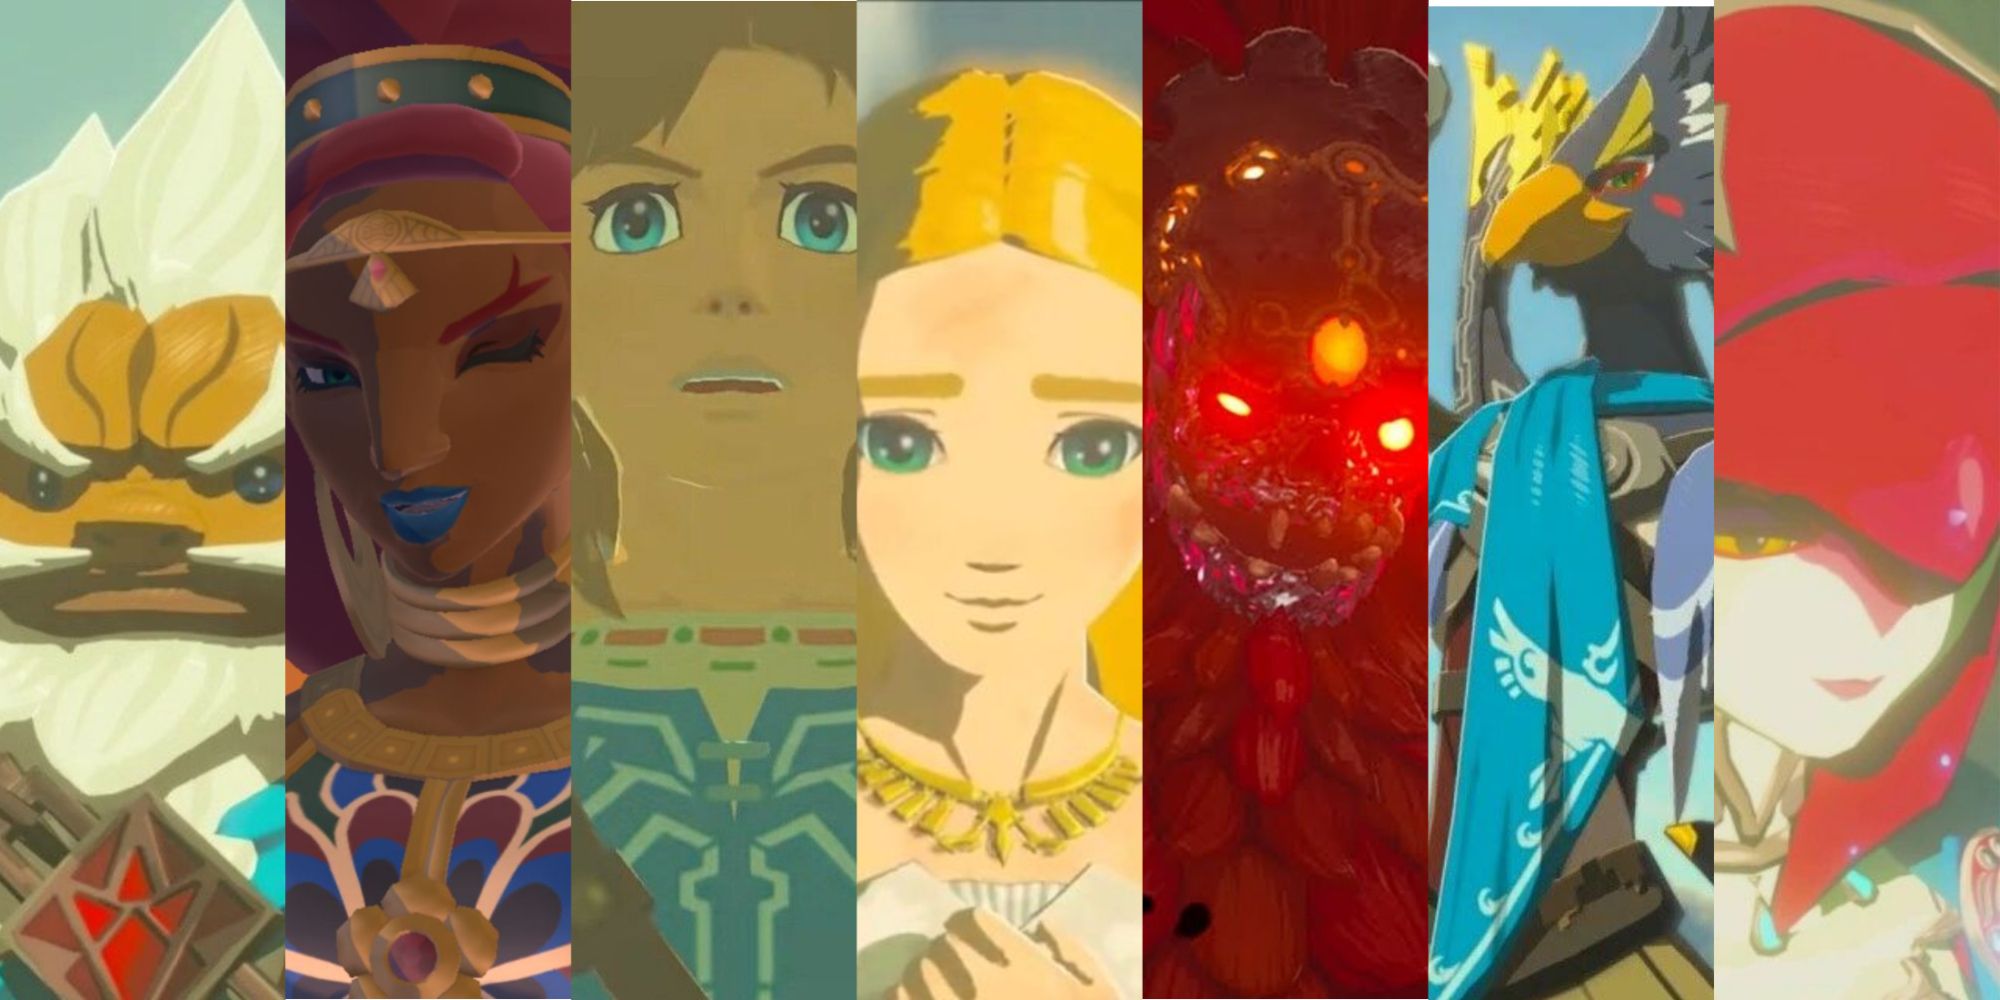 From left to right, Daruk, Urbosa, Link, Zelda, Ganon, Revali, and Mipha